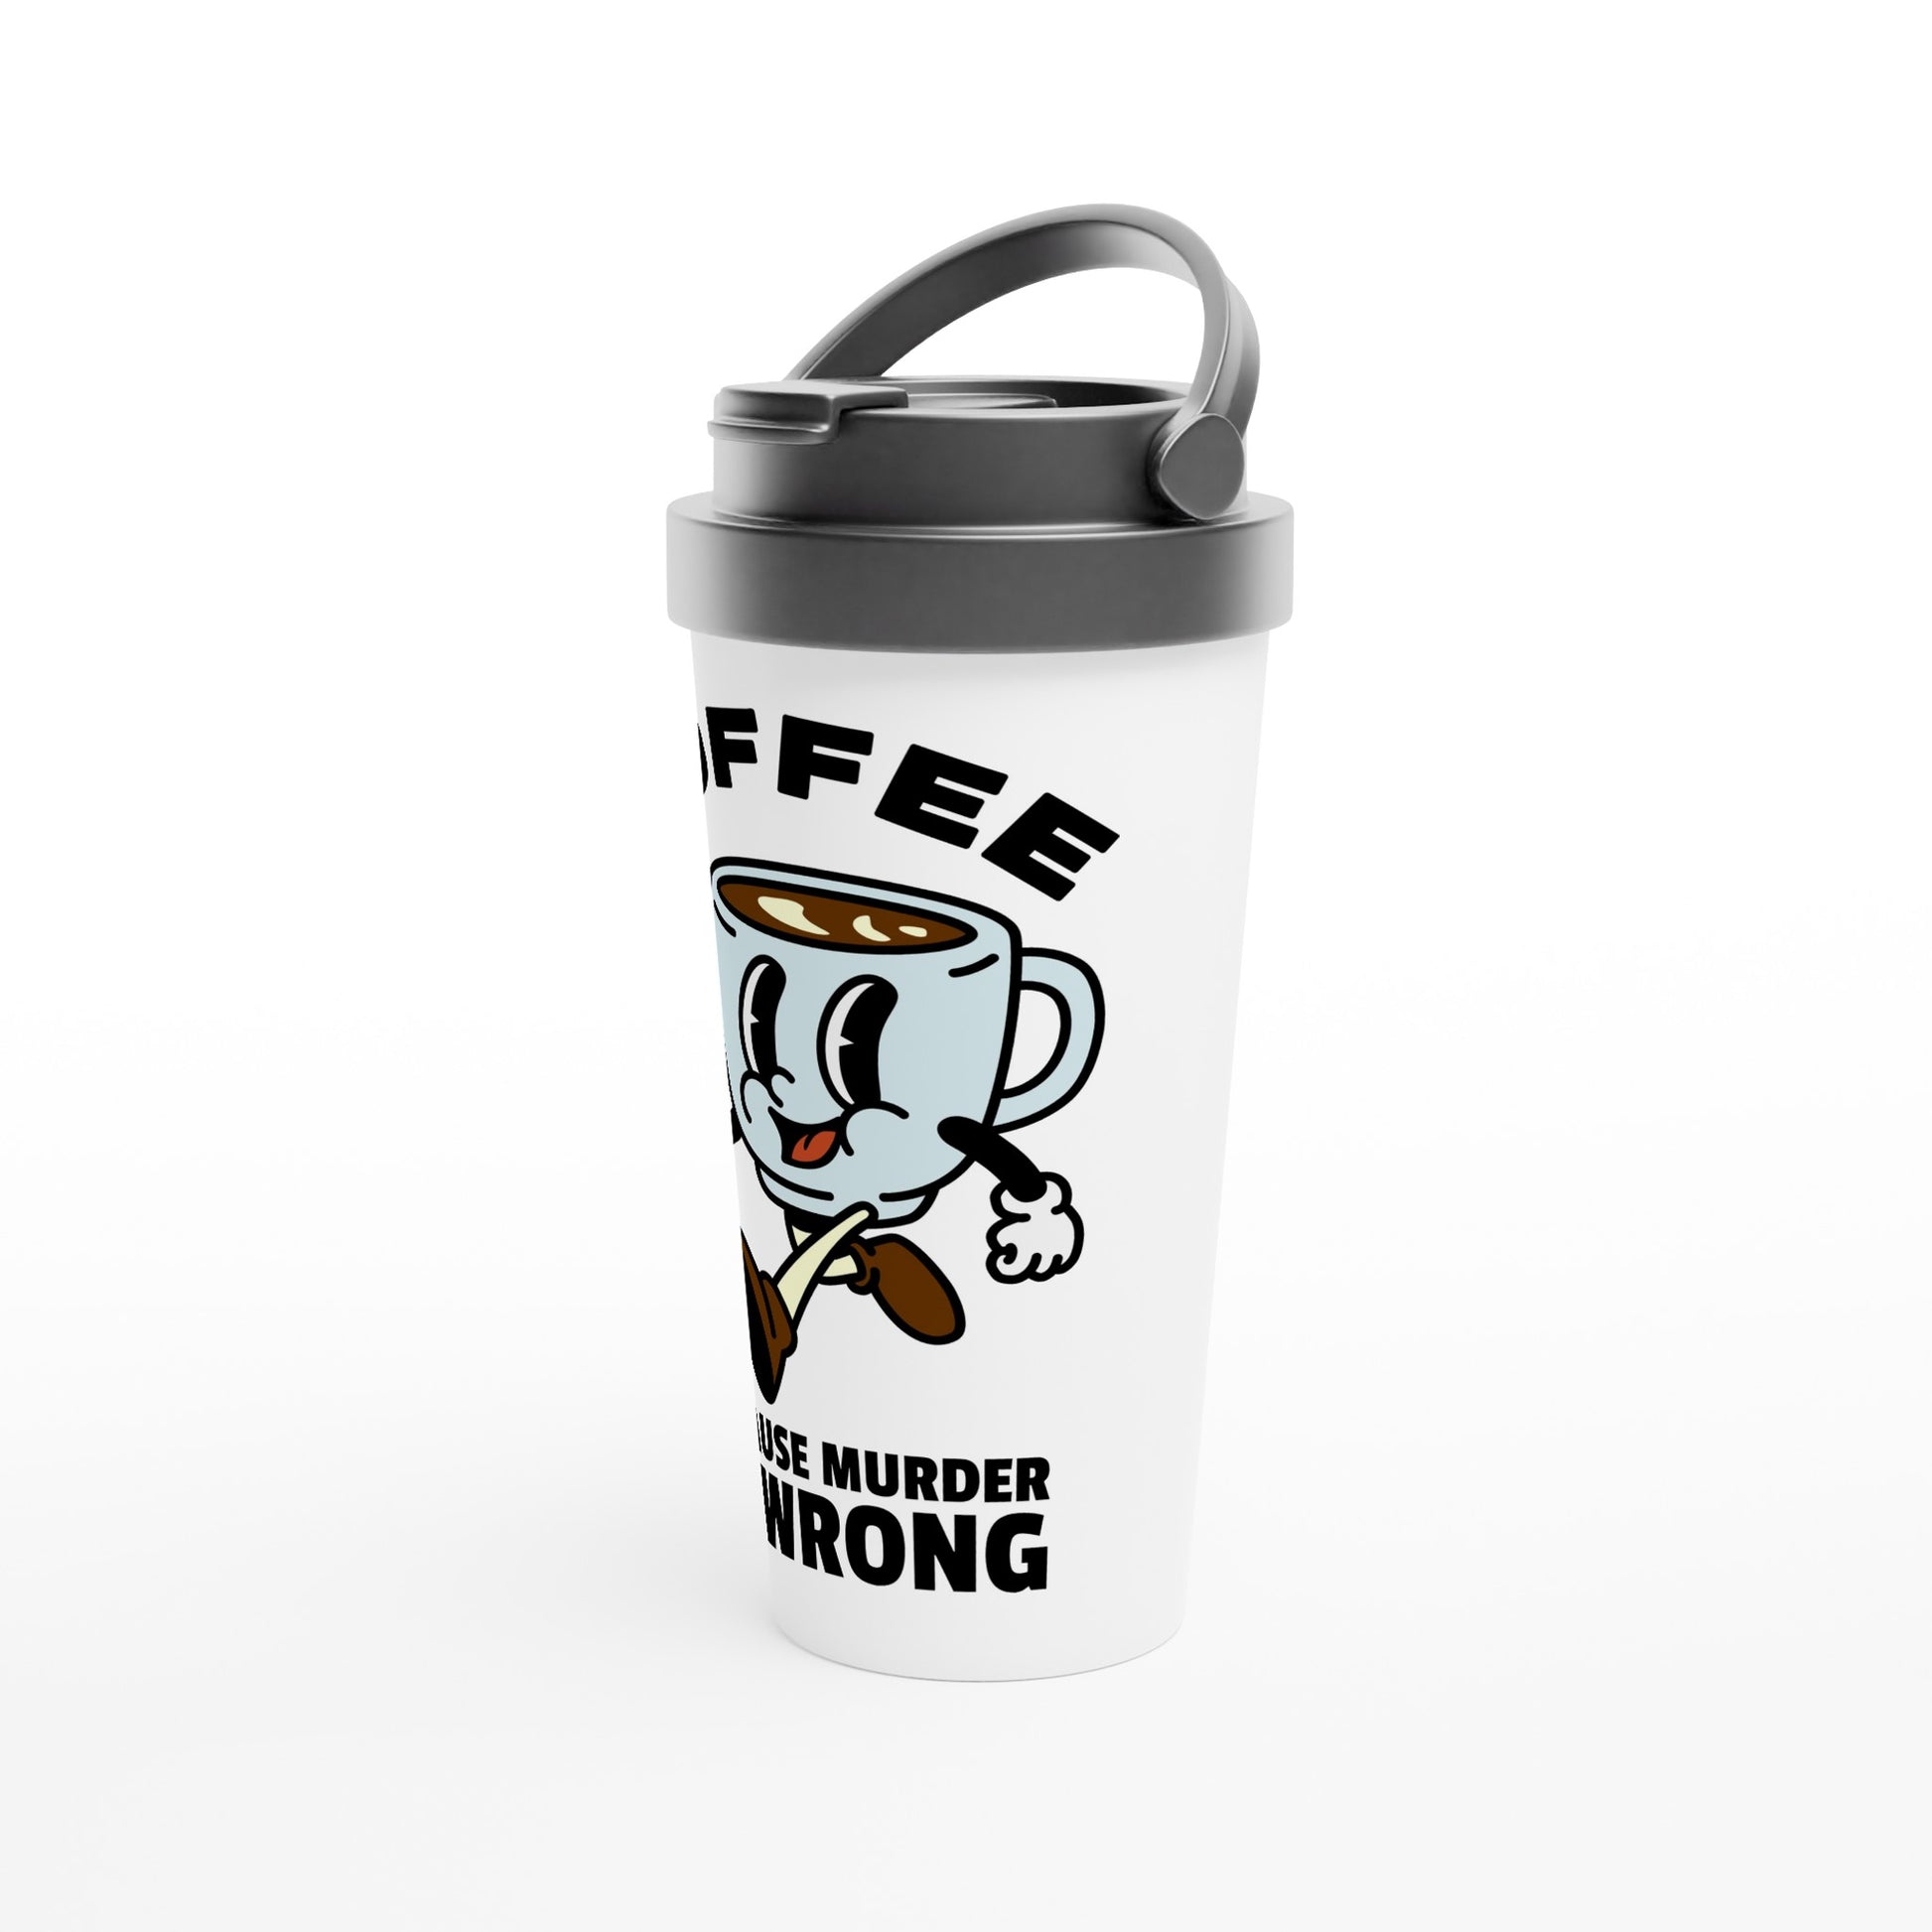 Coffee, Because Murder Is Wrong - White 15oz Stainless Steel Travel Mug Travel Mug Coffee